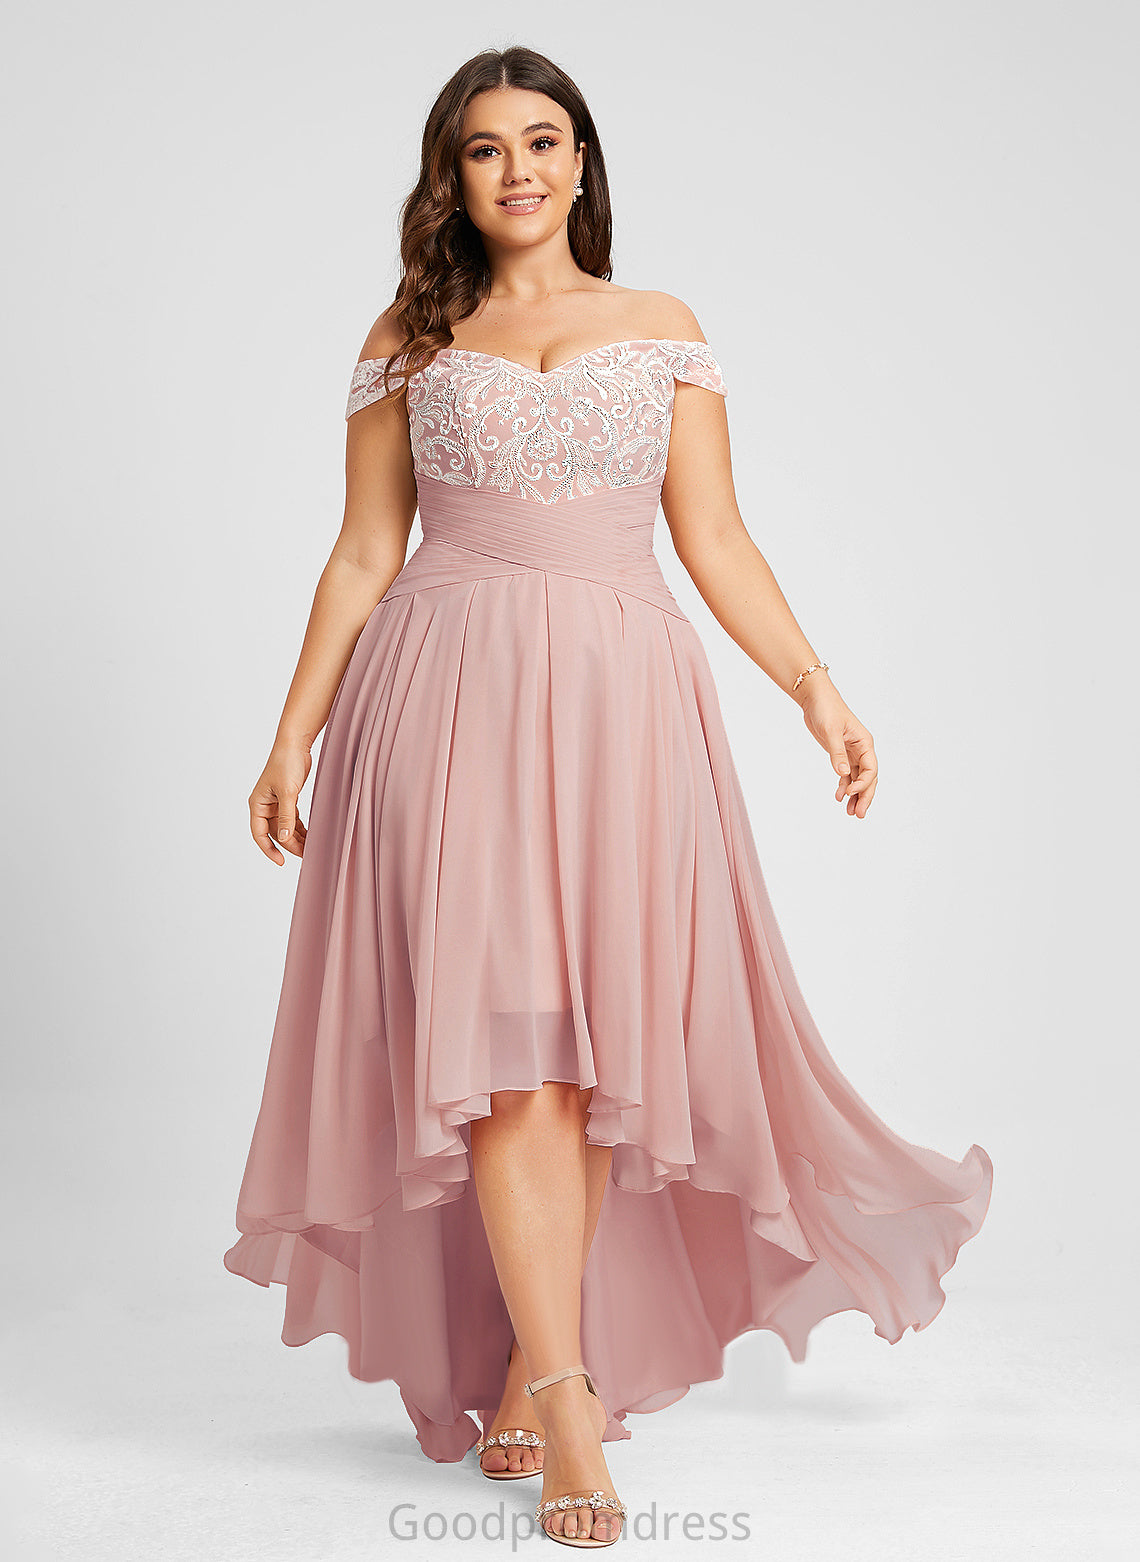 Skye With Pleated A-Line Asymmetrical Off-the-Shoulder Dress Chiffon Wedding Dresses Lace Wedding